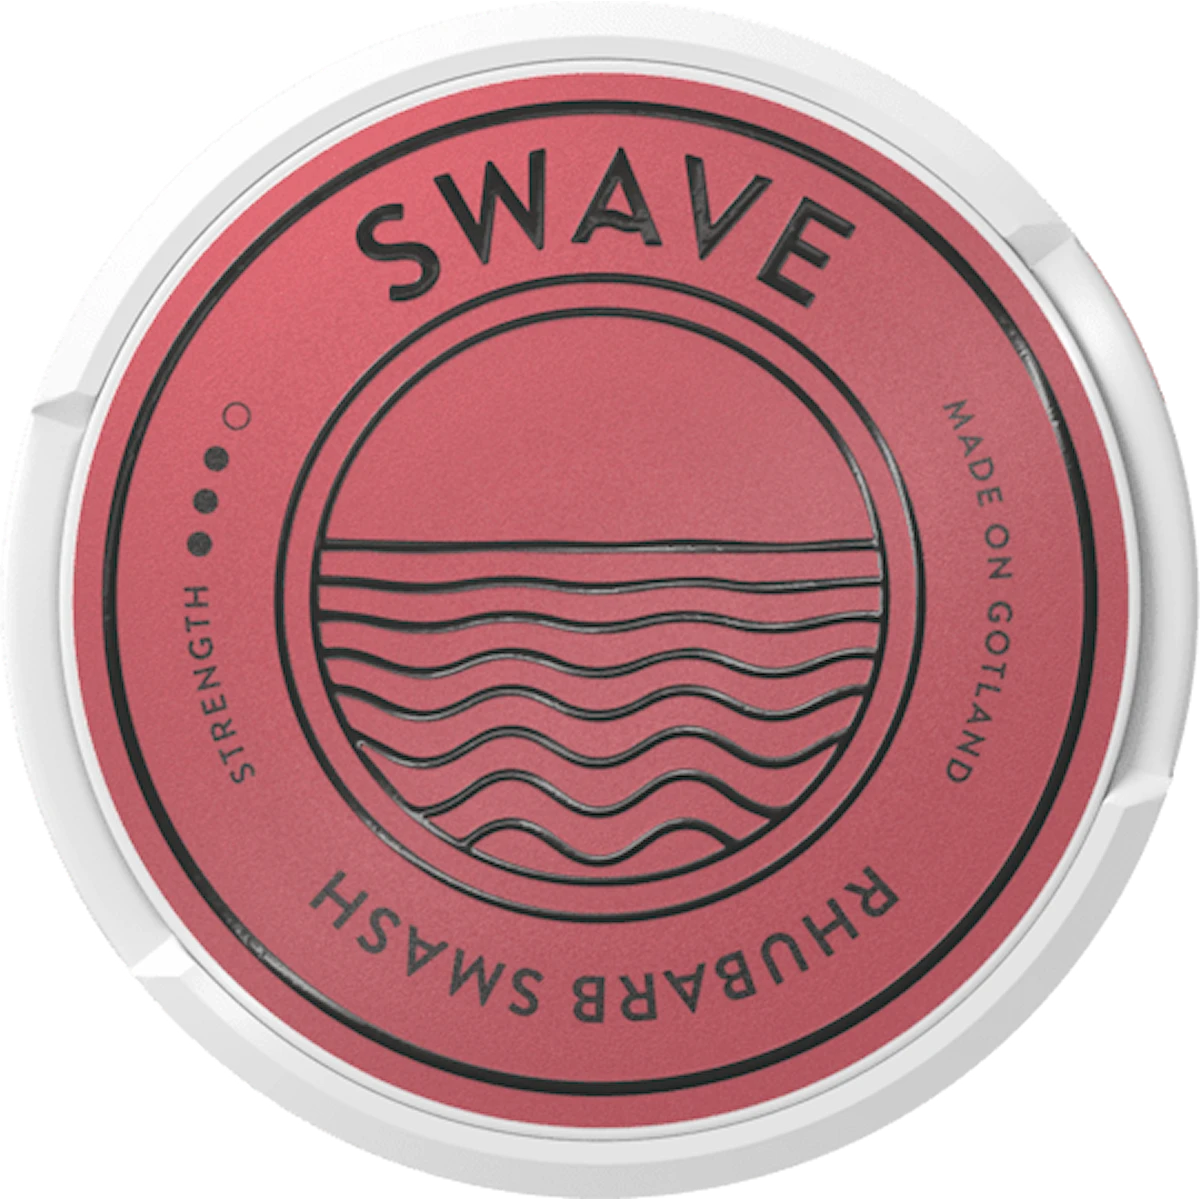 Swave Rhubarb Smash Slim Strong